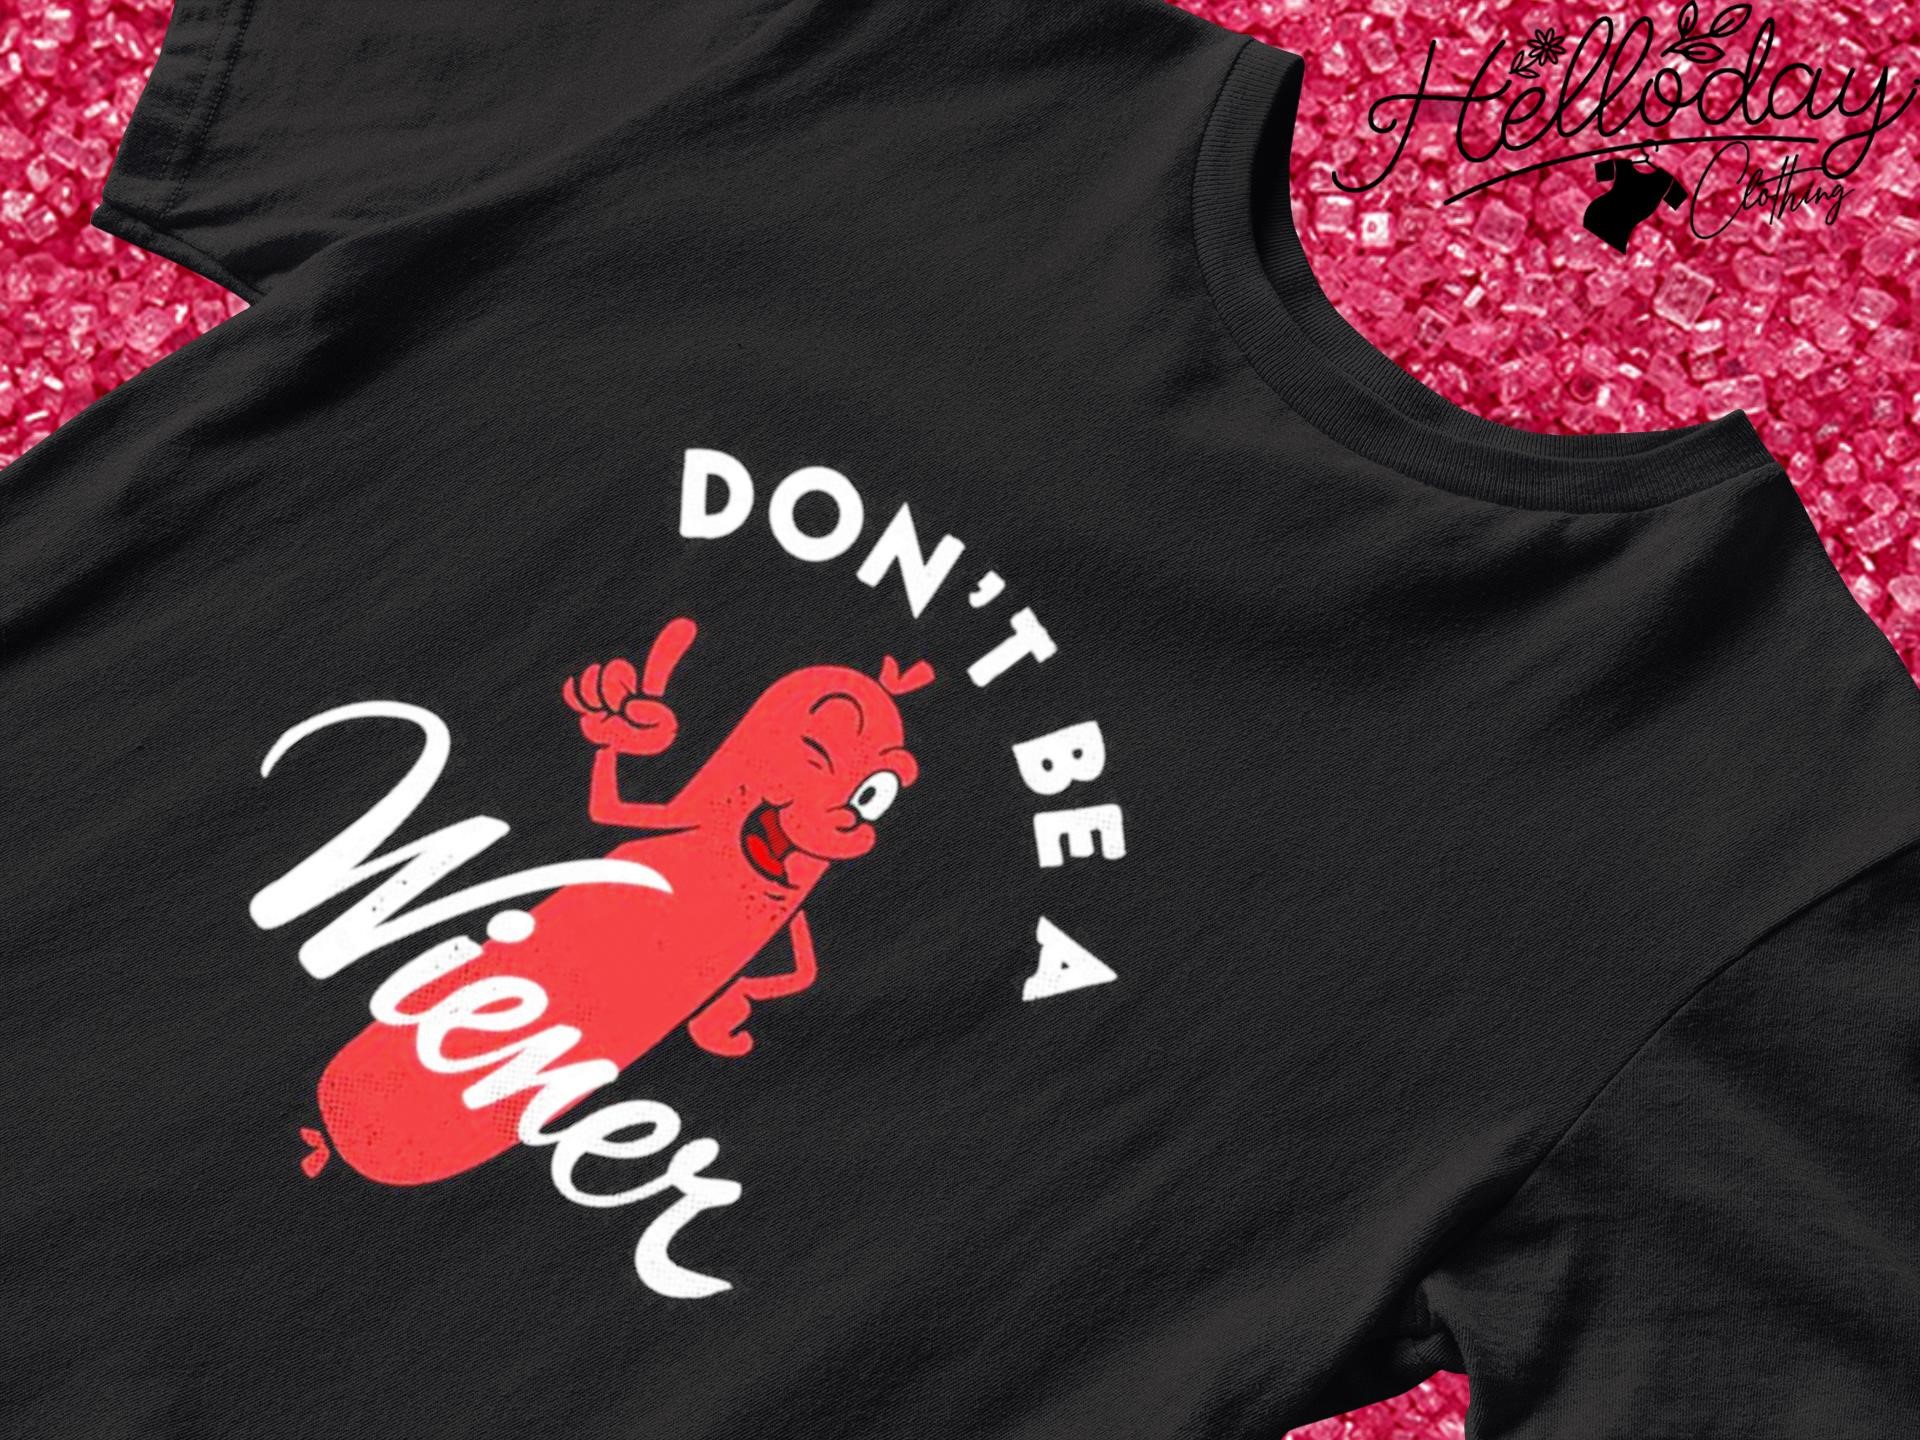 Don't be a Wiener shirt